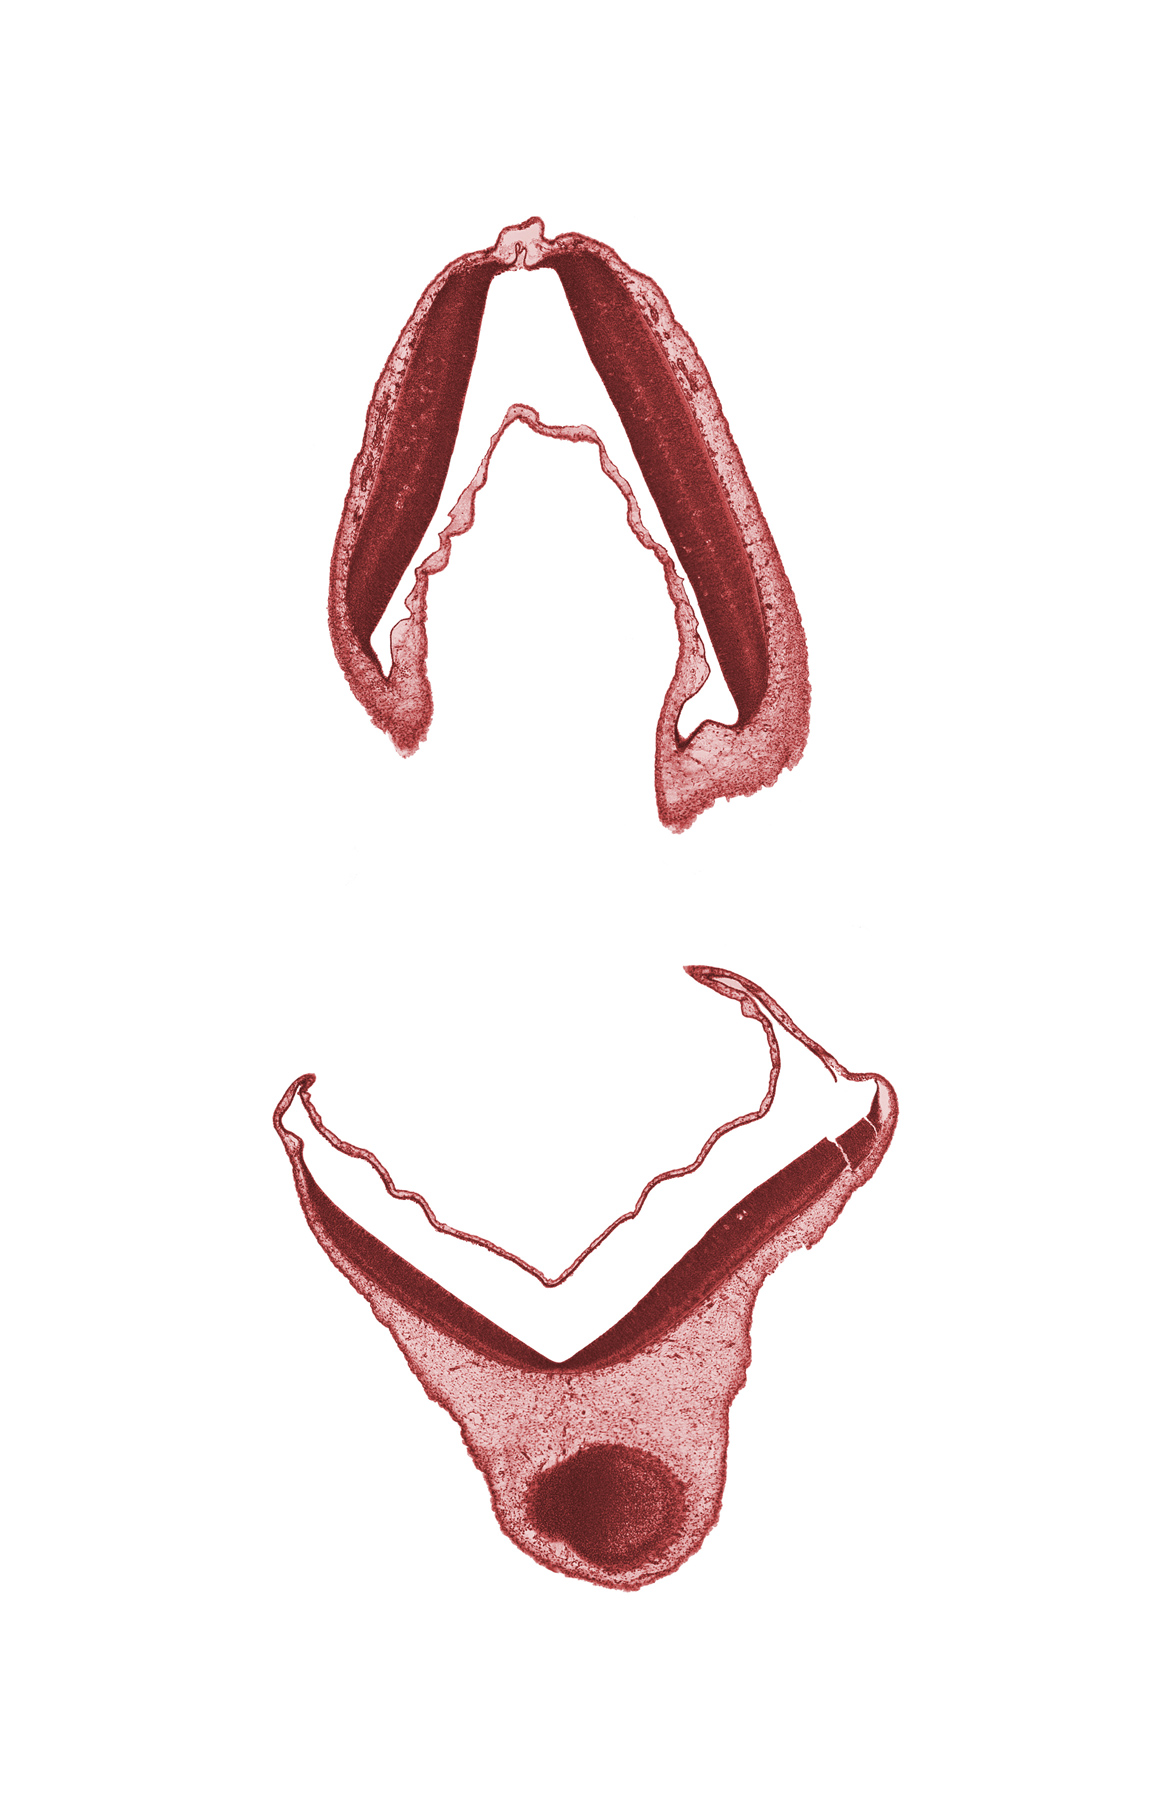 mesencephalon (M2), tissue fracture (artifact), vascular plexus